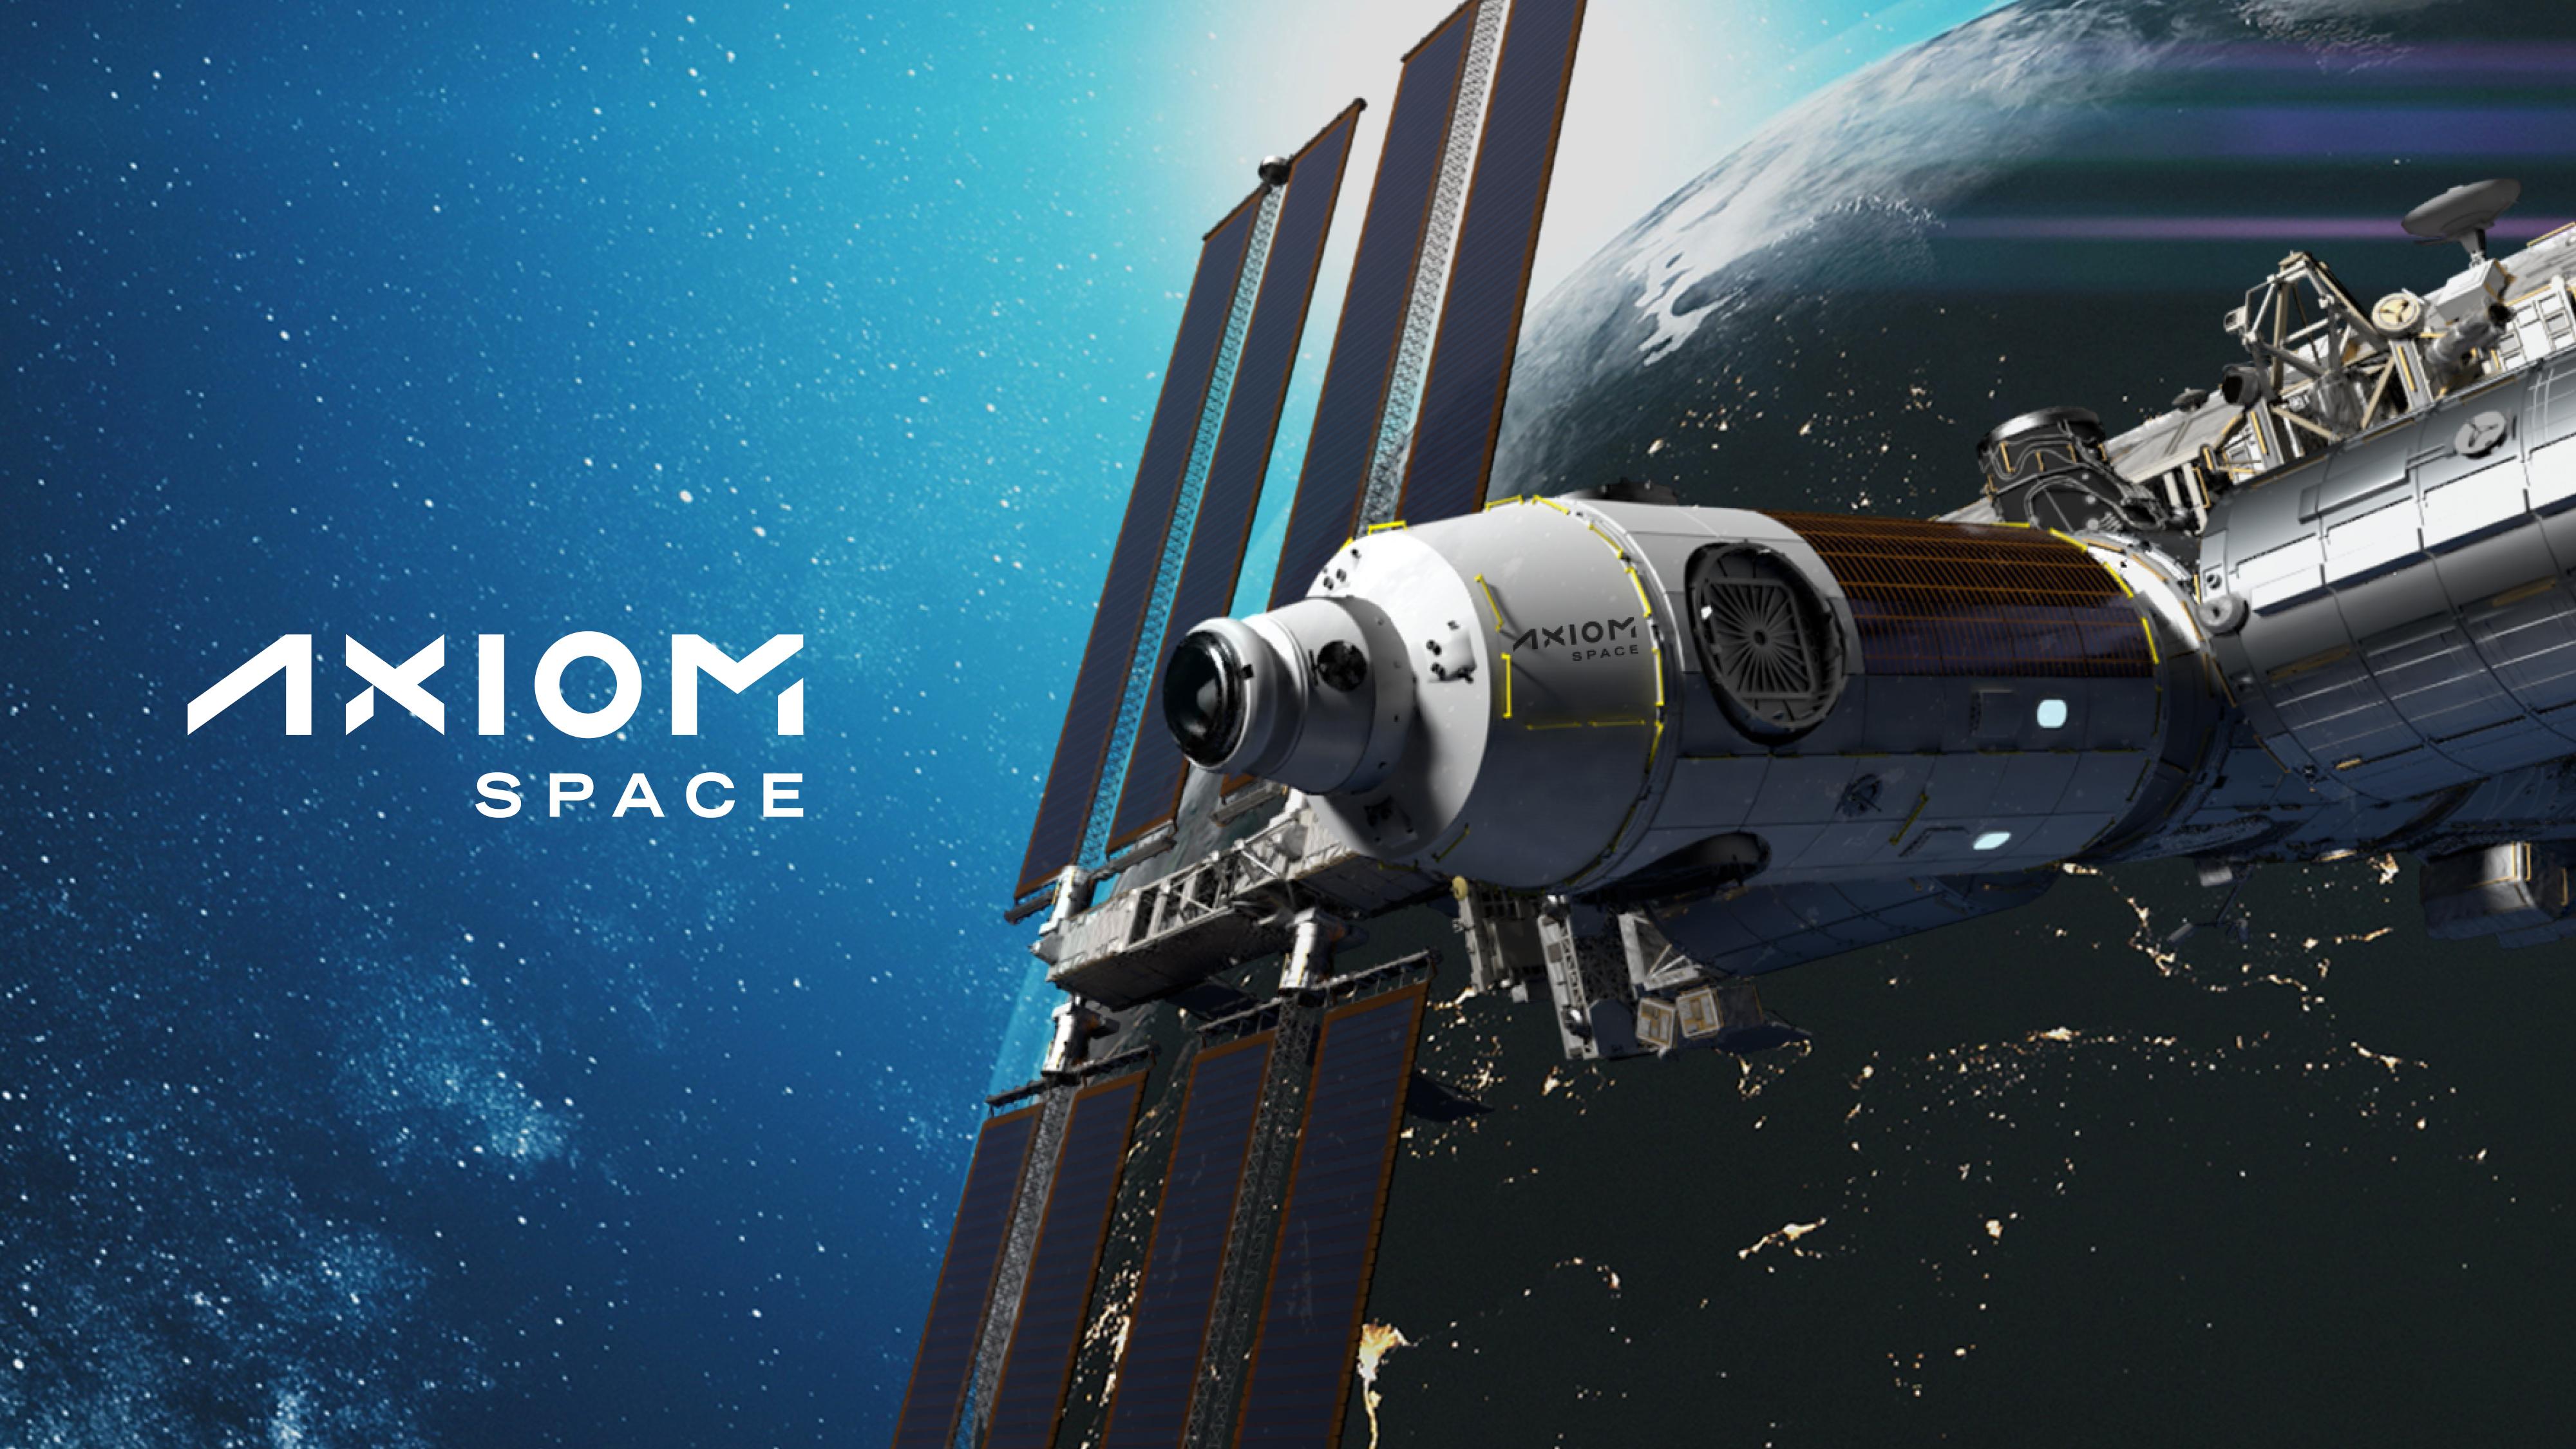 Axiom Space logo and equipment